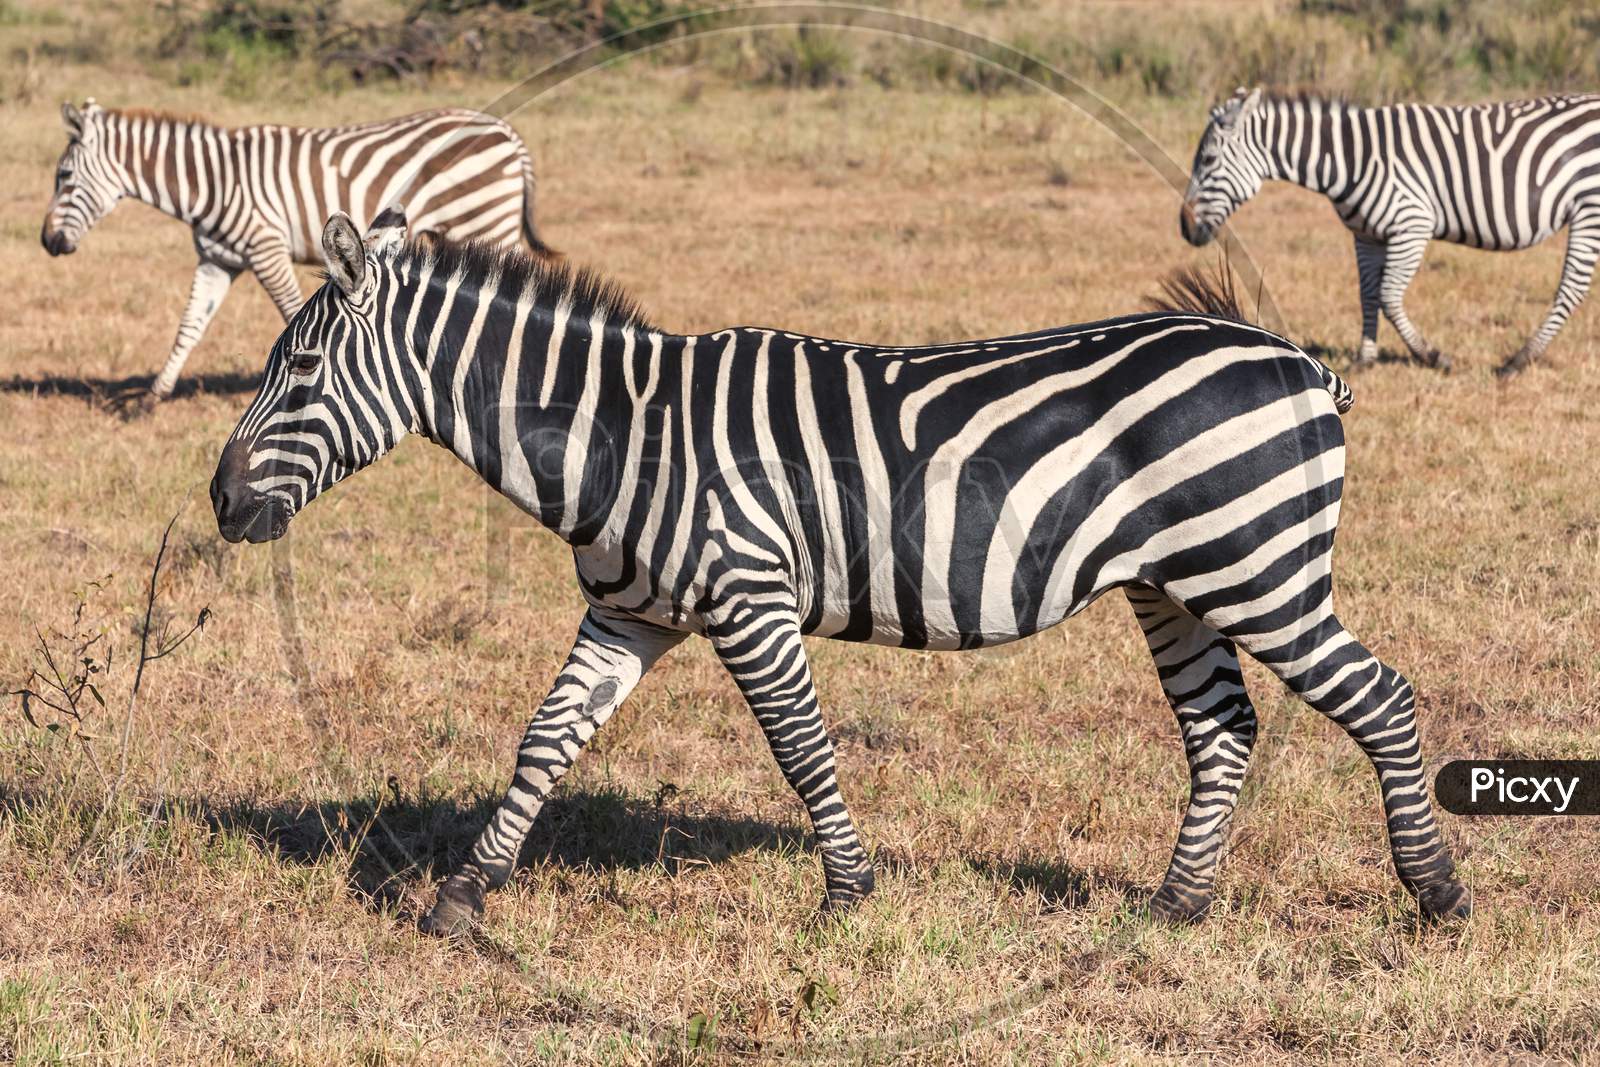 Zebras In The Grasslands